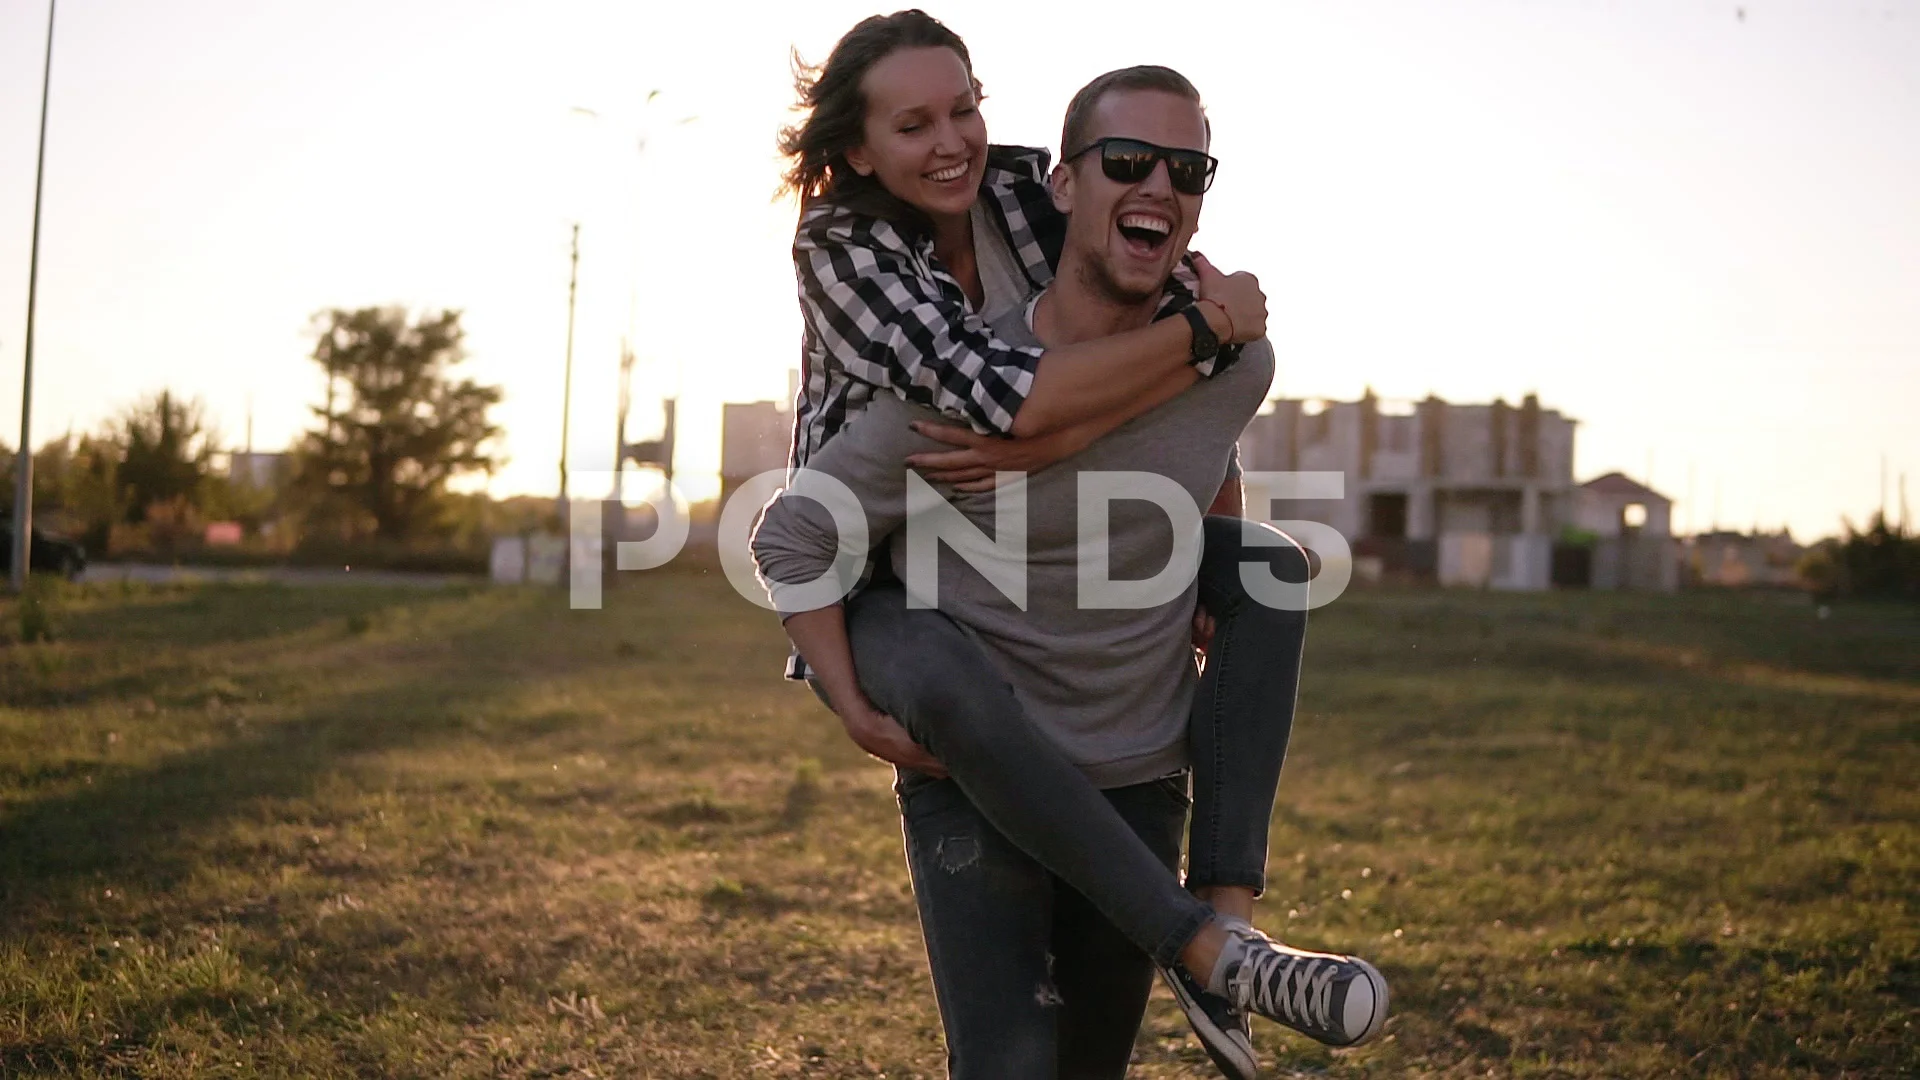 Young Man Giving Woman Piggyback Outdoors, Stock image